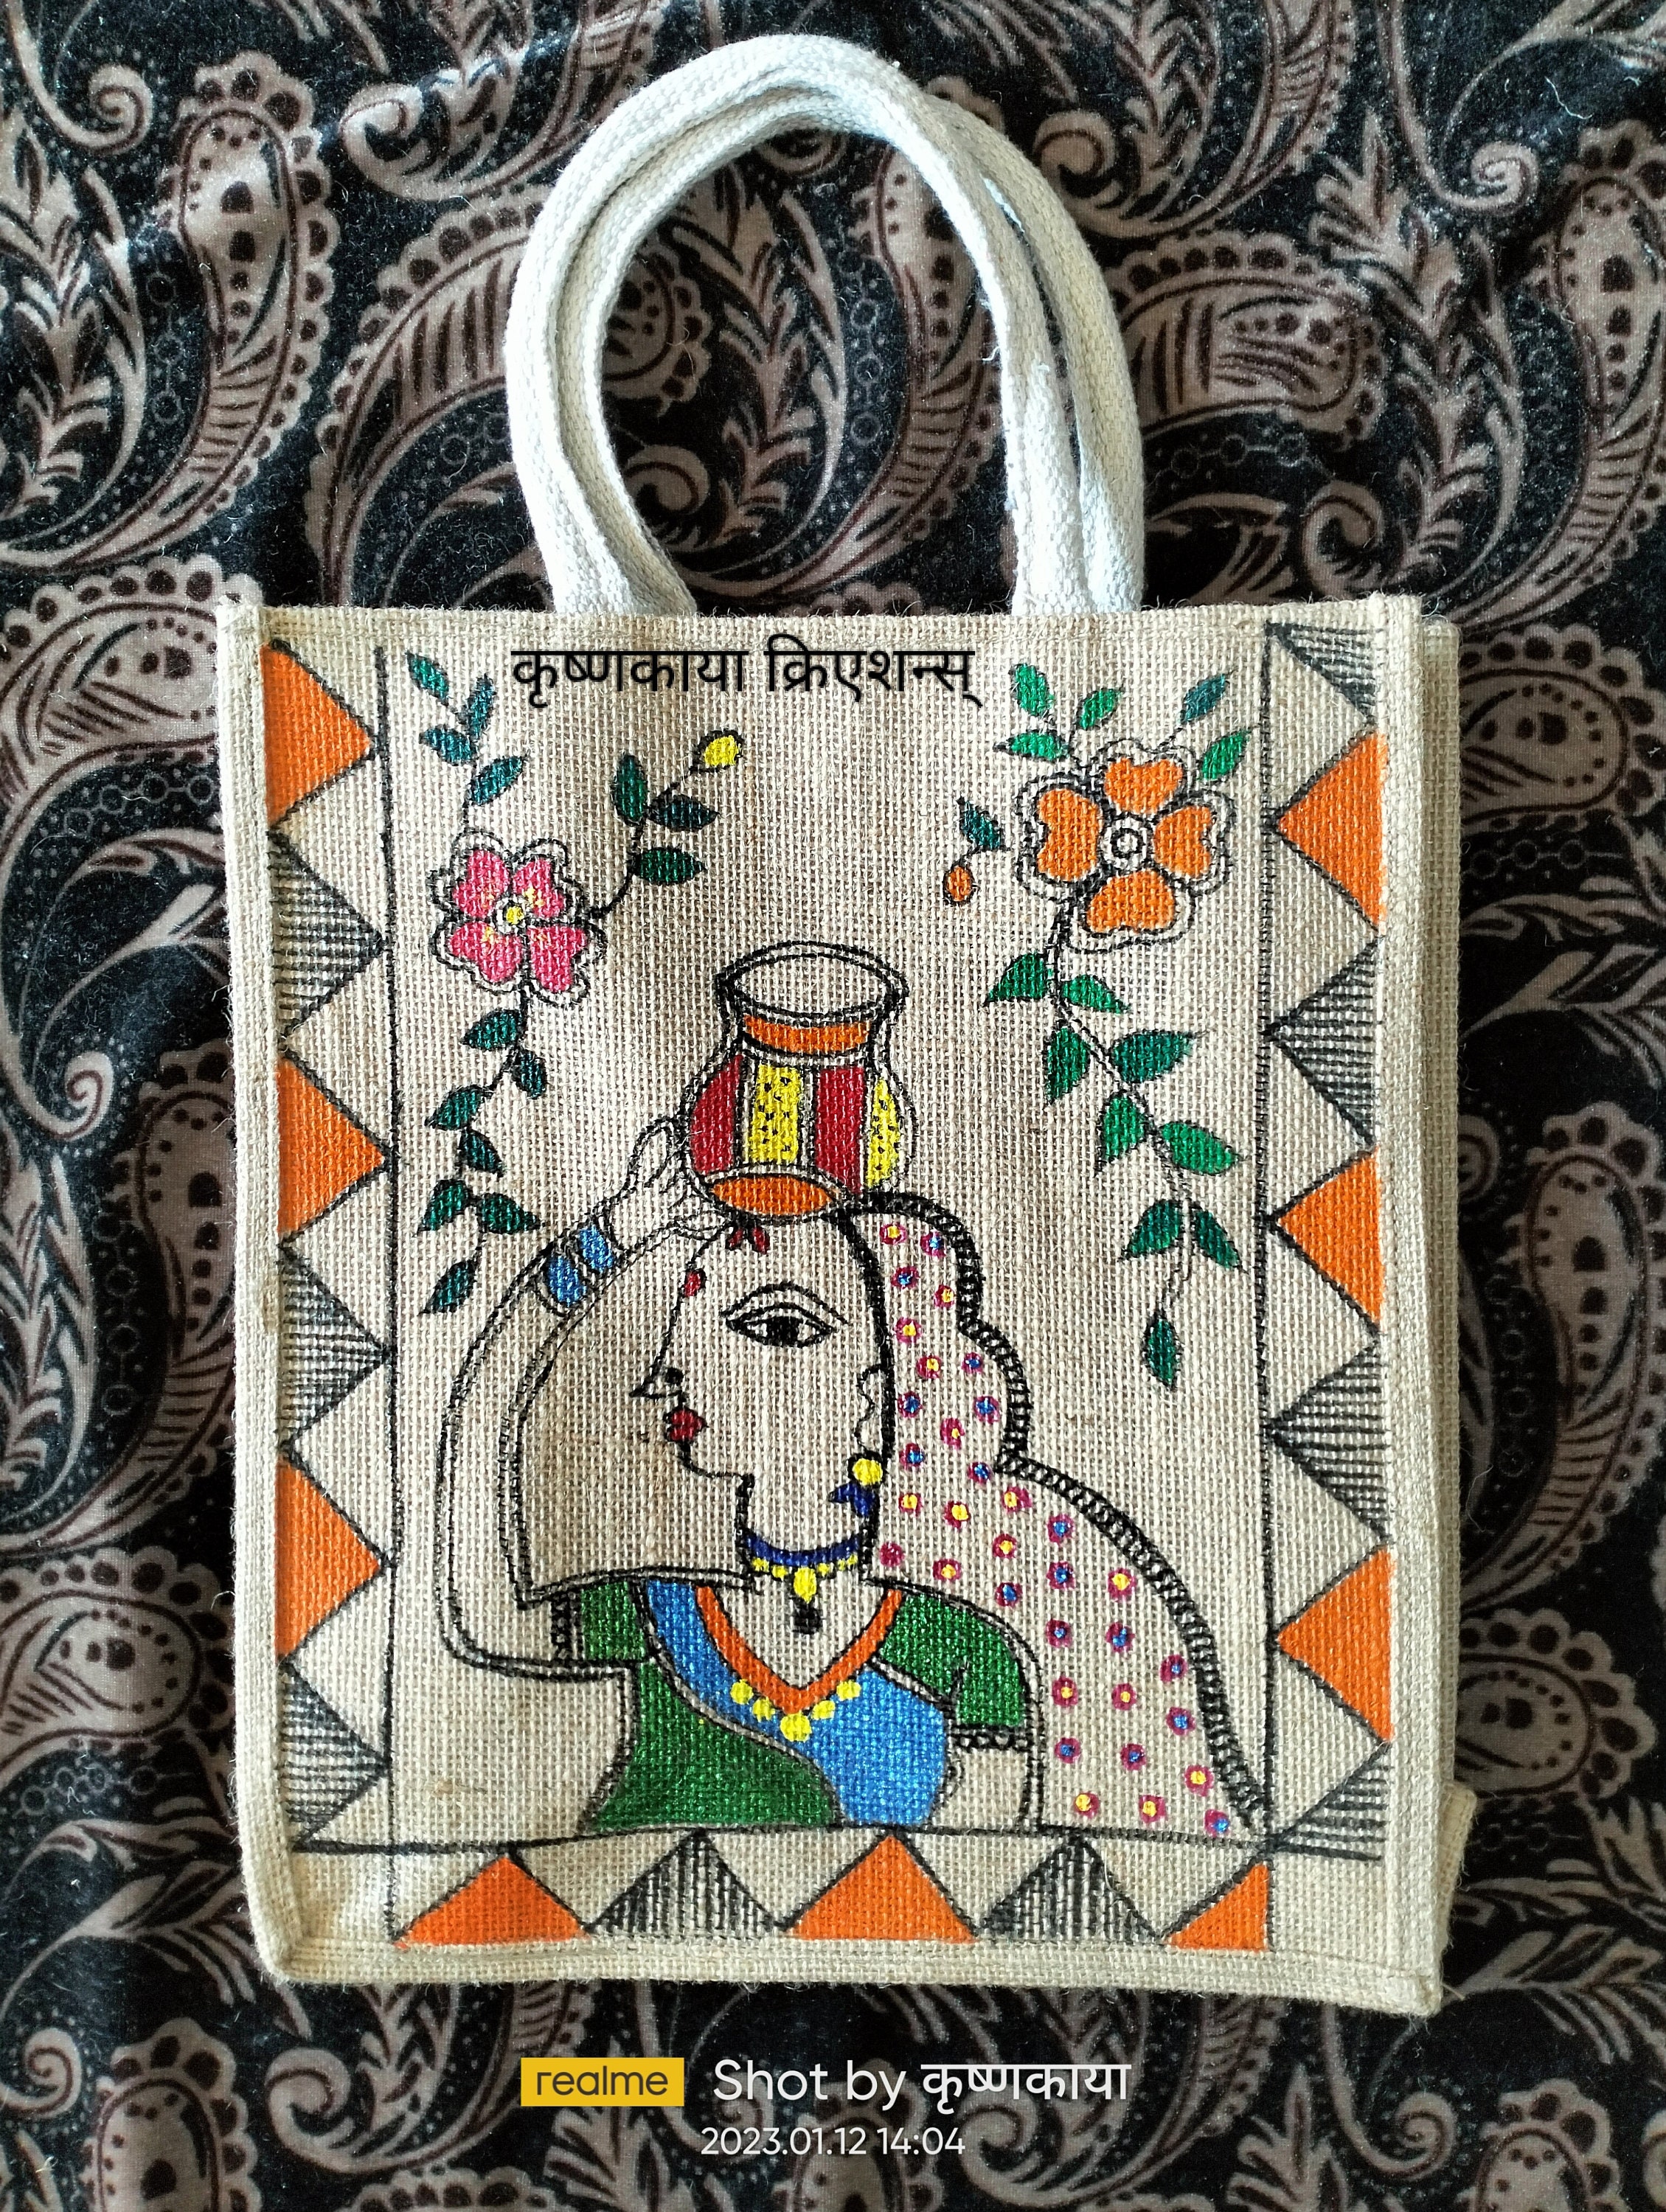 Jute Bag Mithila Painting | Madhubani Painting on Jute Bag | Tutorial |  Kalpana's Imaginations - YouTube